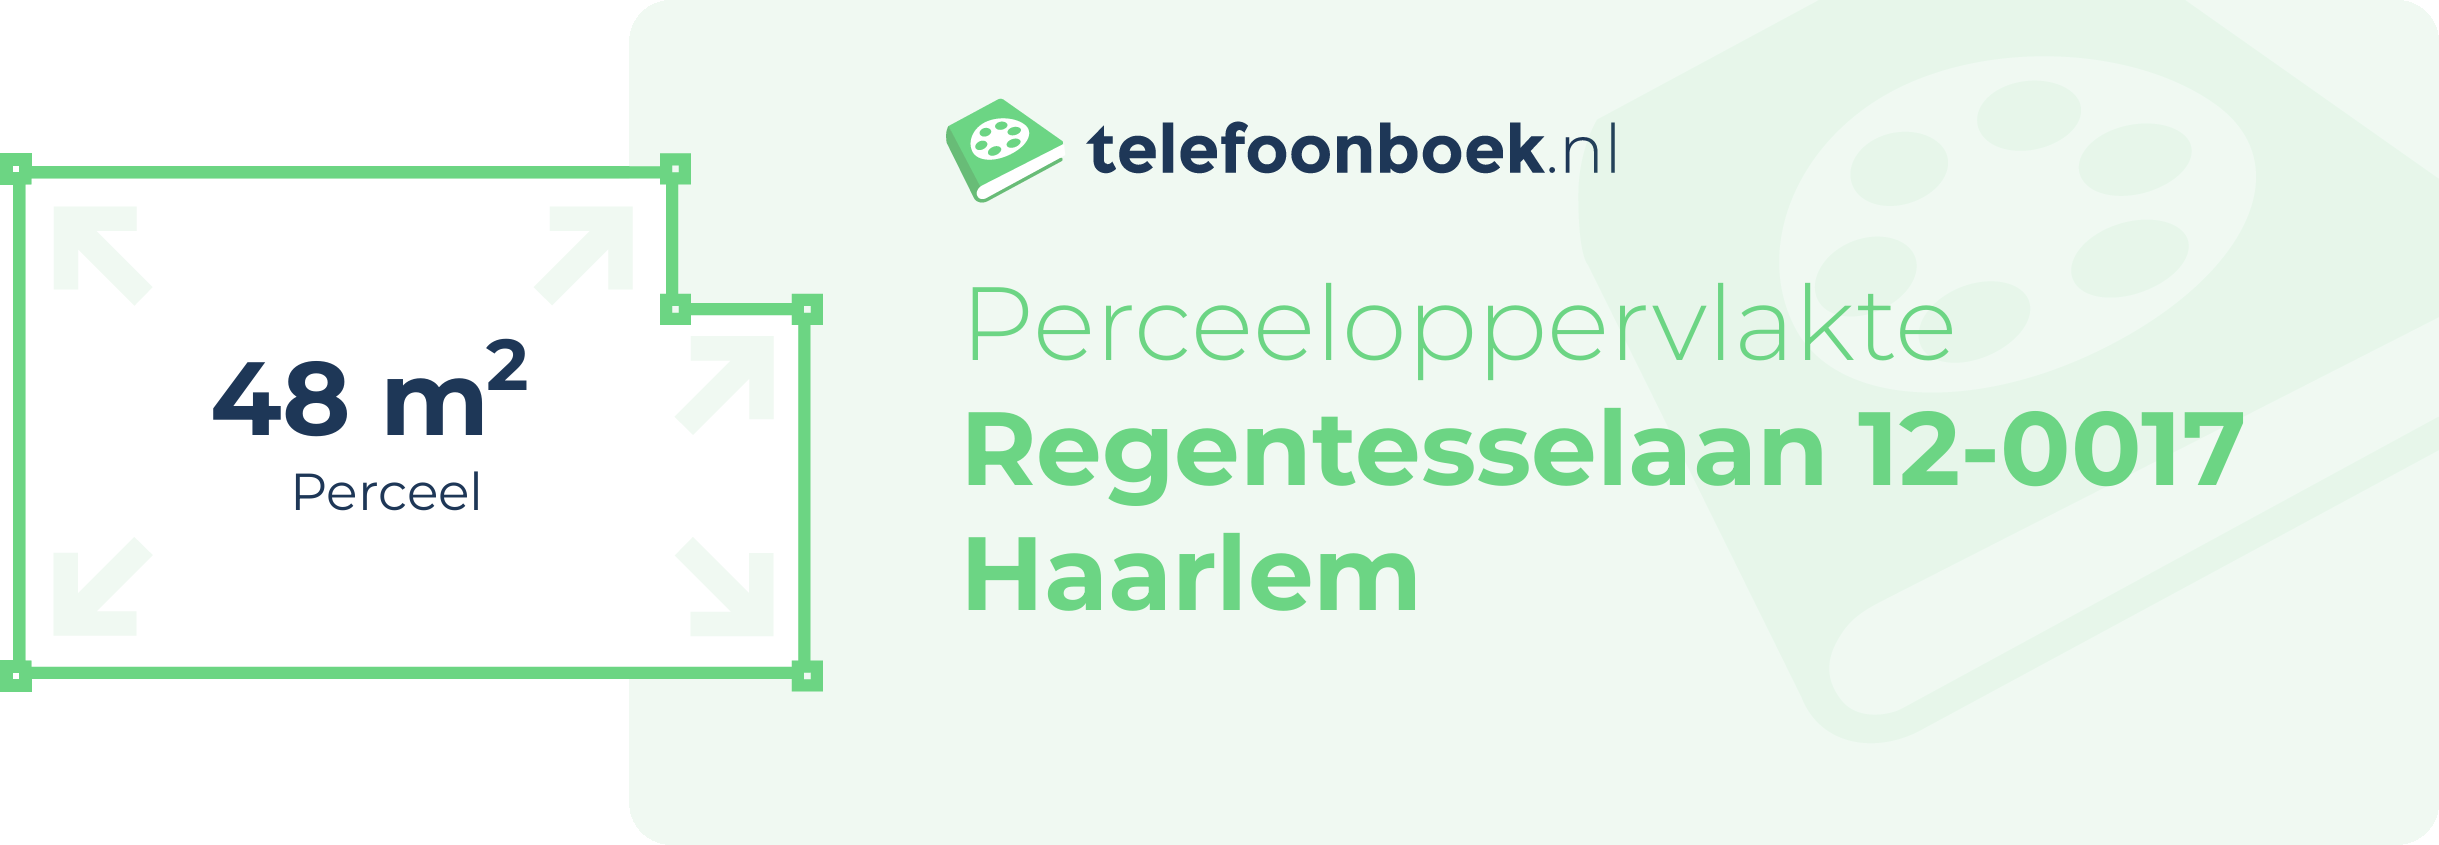 Perceeloppervlakte Regentesselaan 12-0017 Haarlem